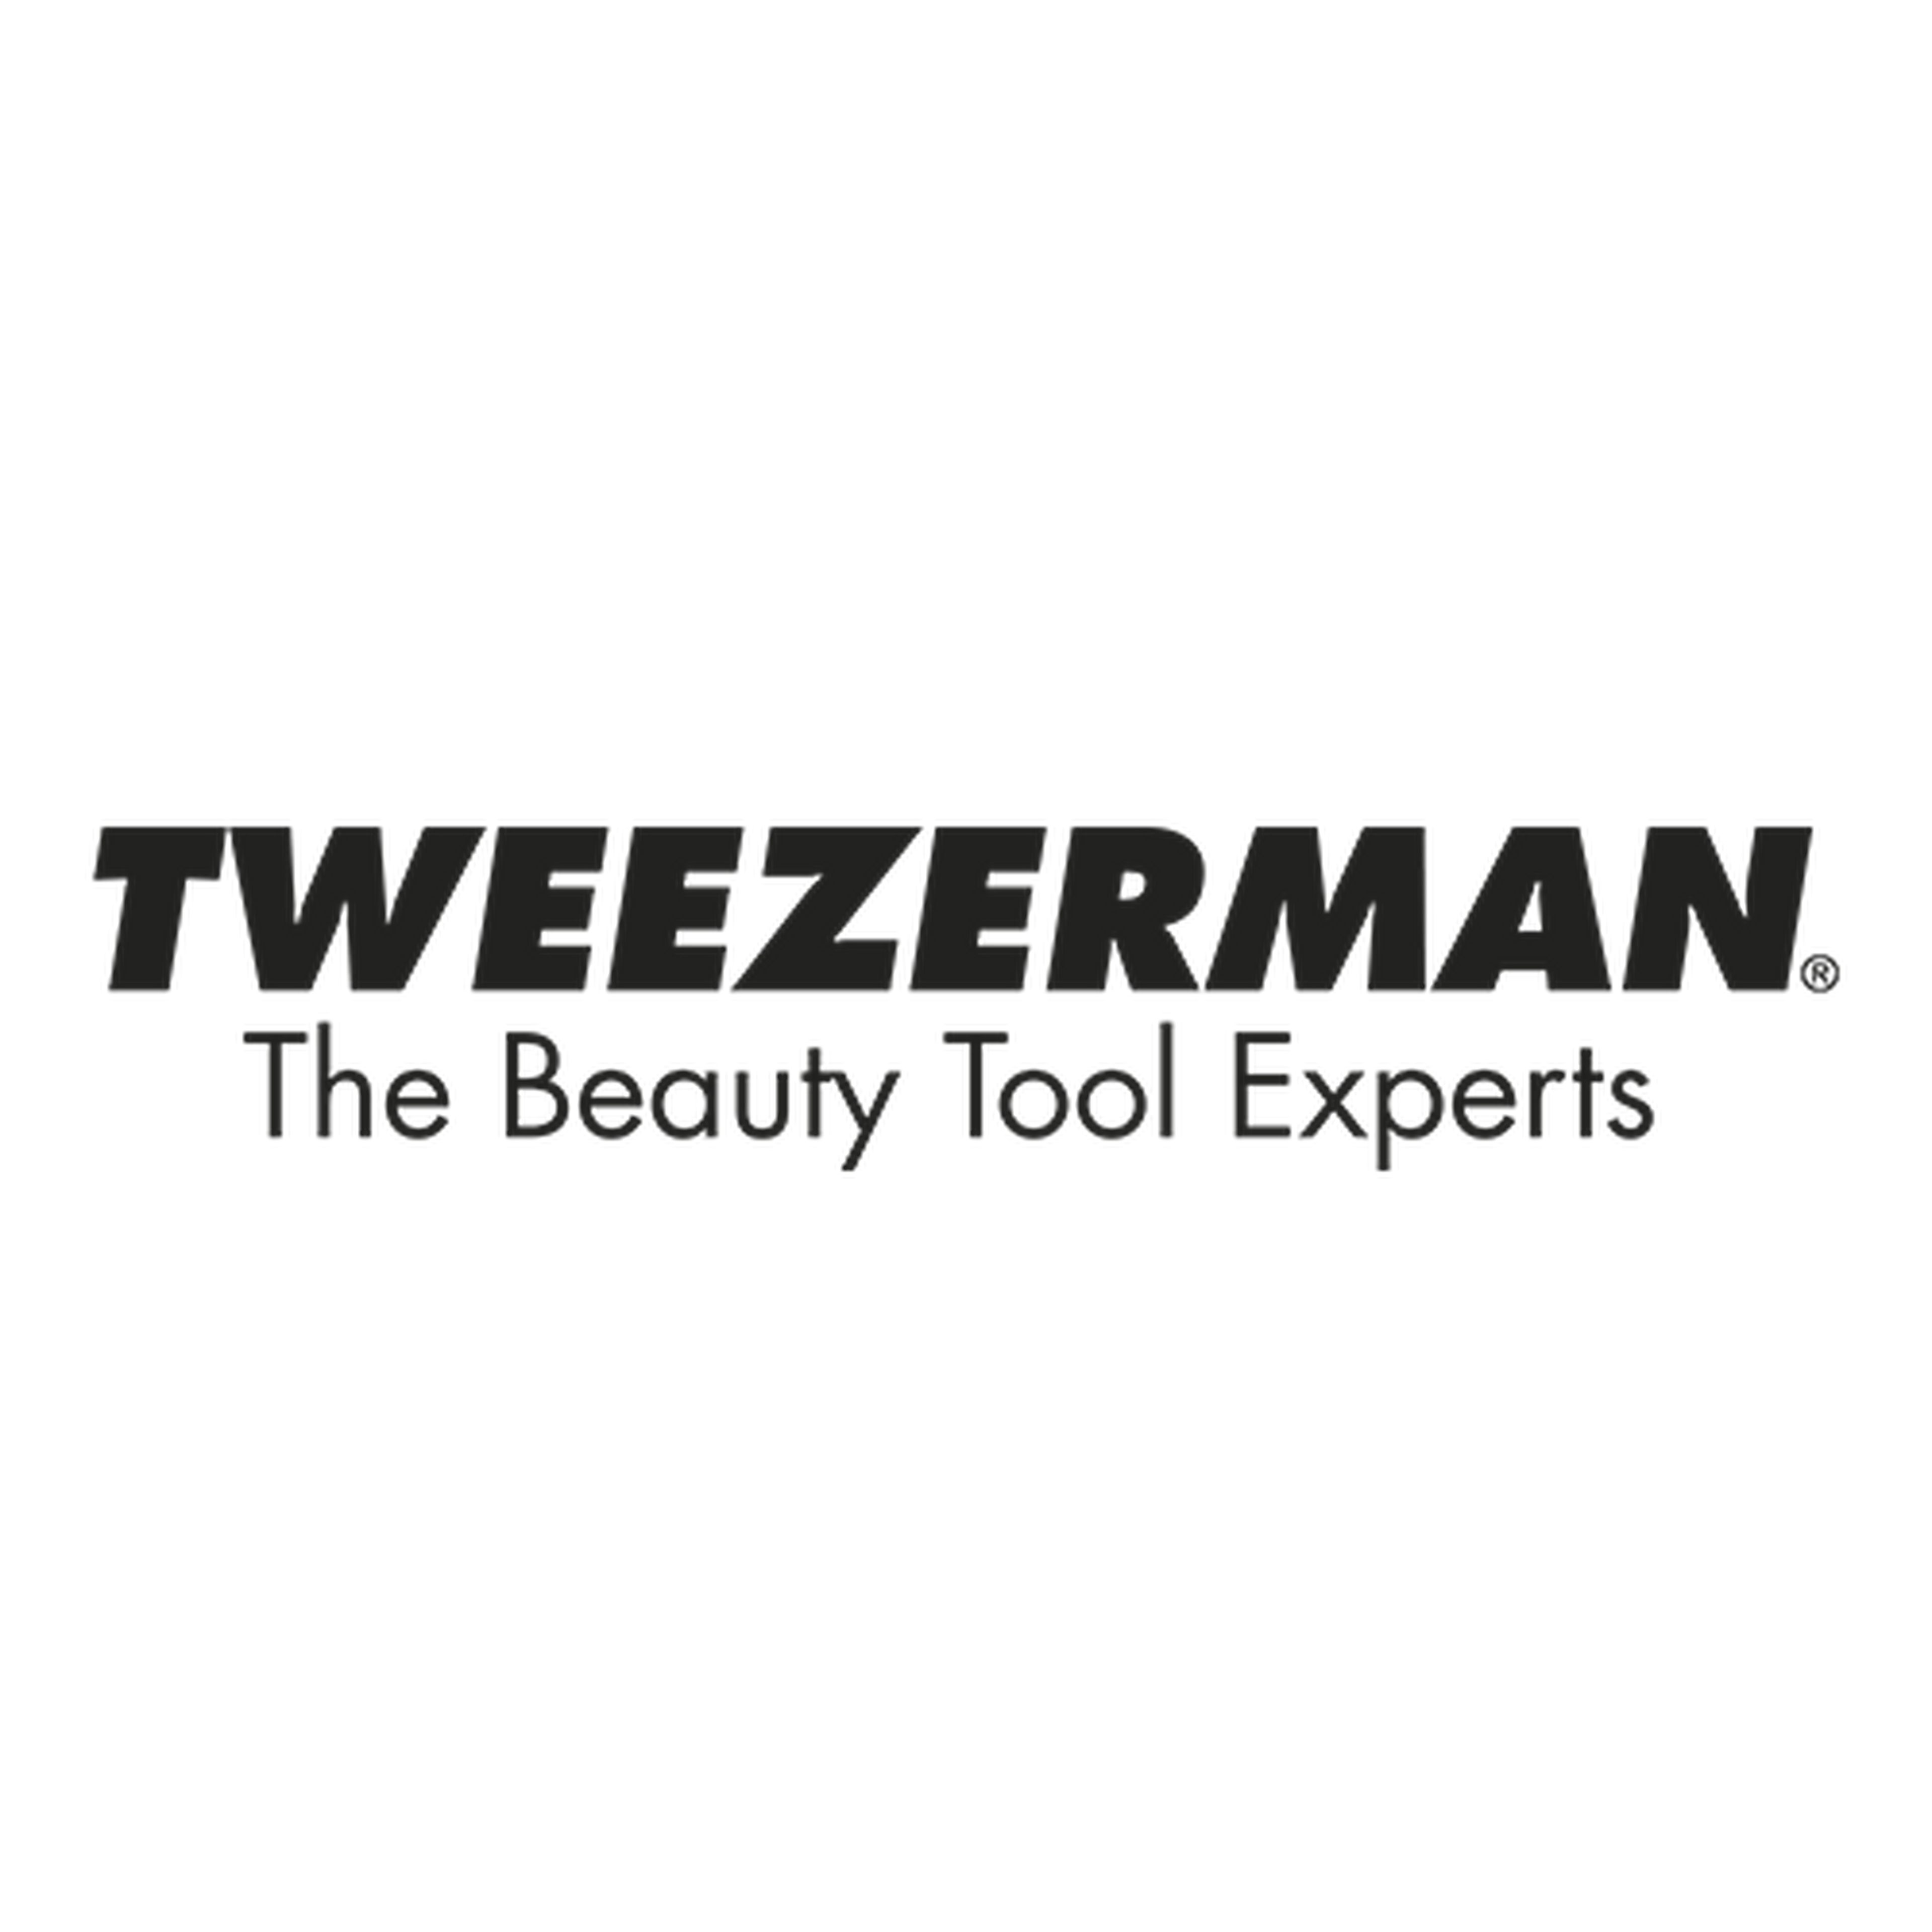 Tweezerman logotype